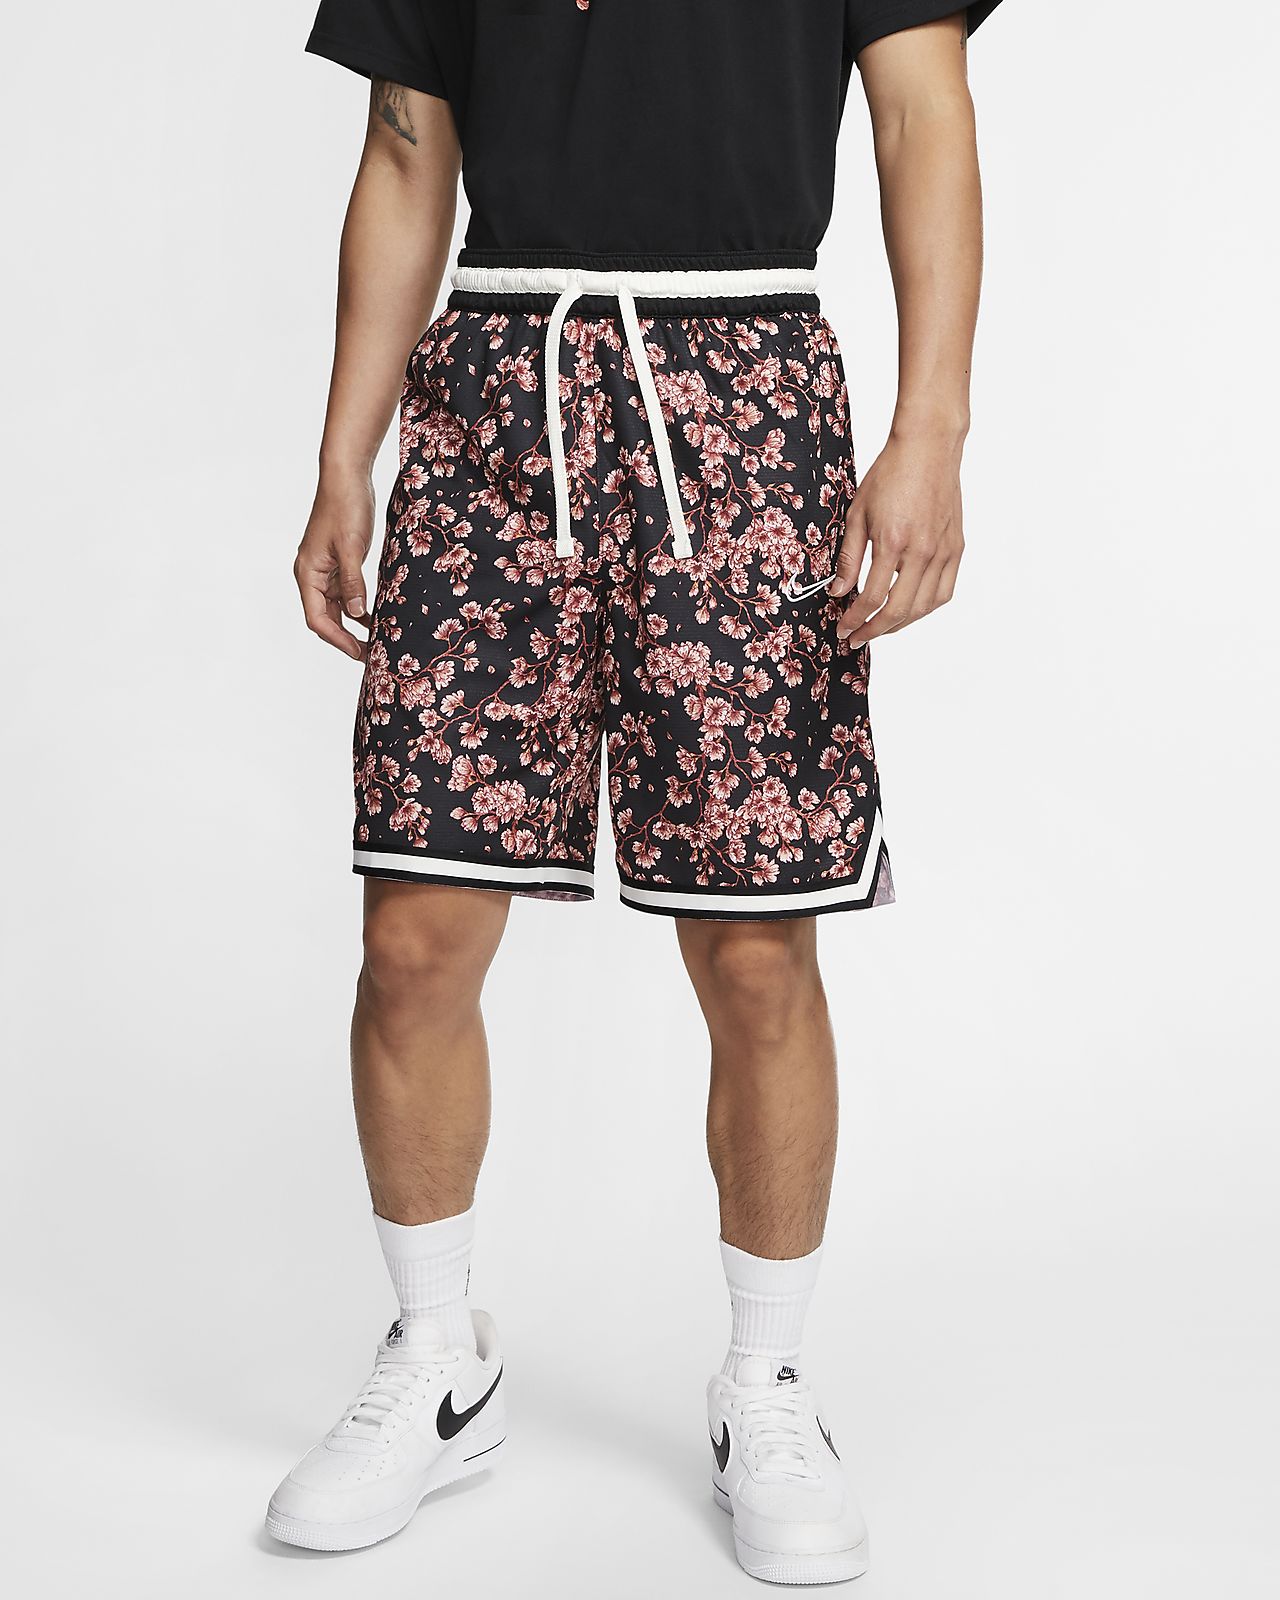 nike basketball shorts floral